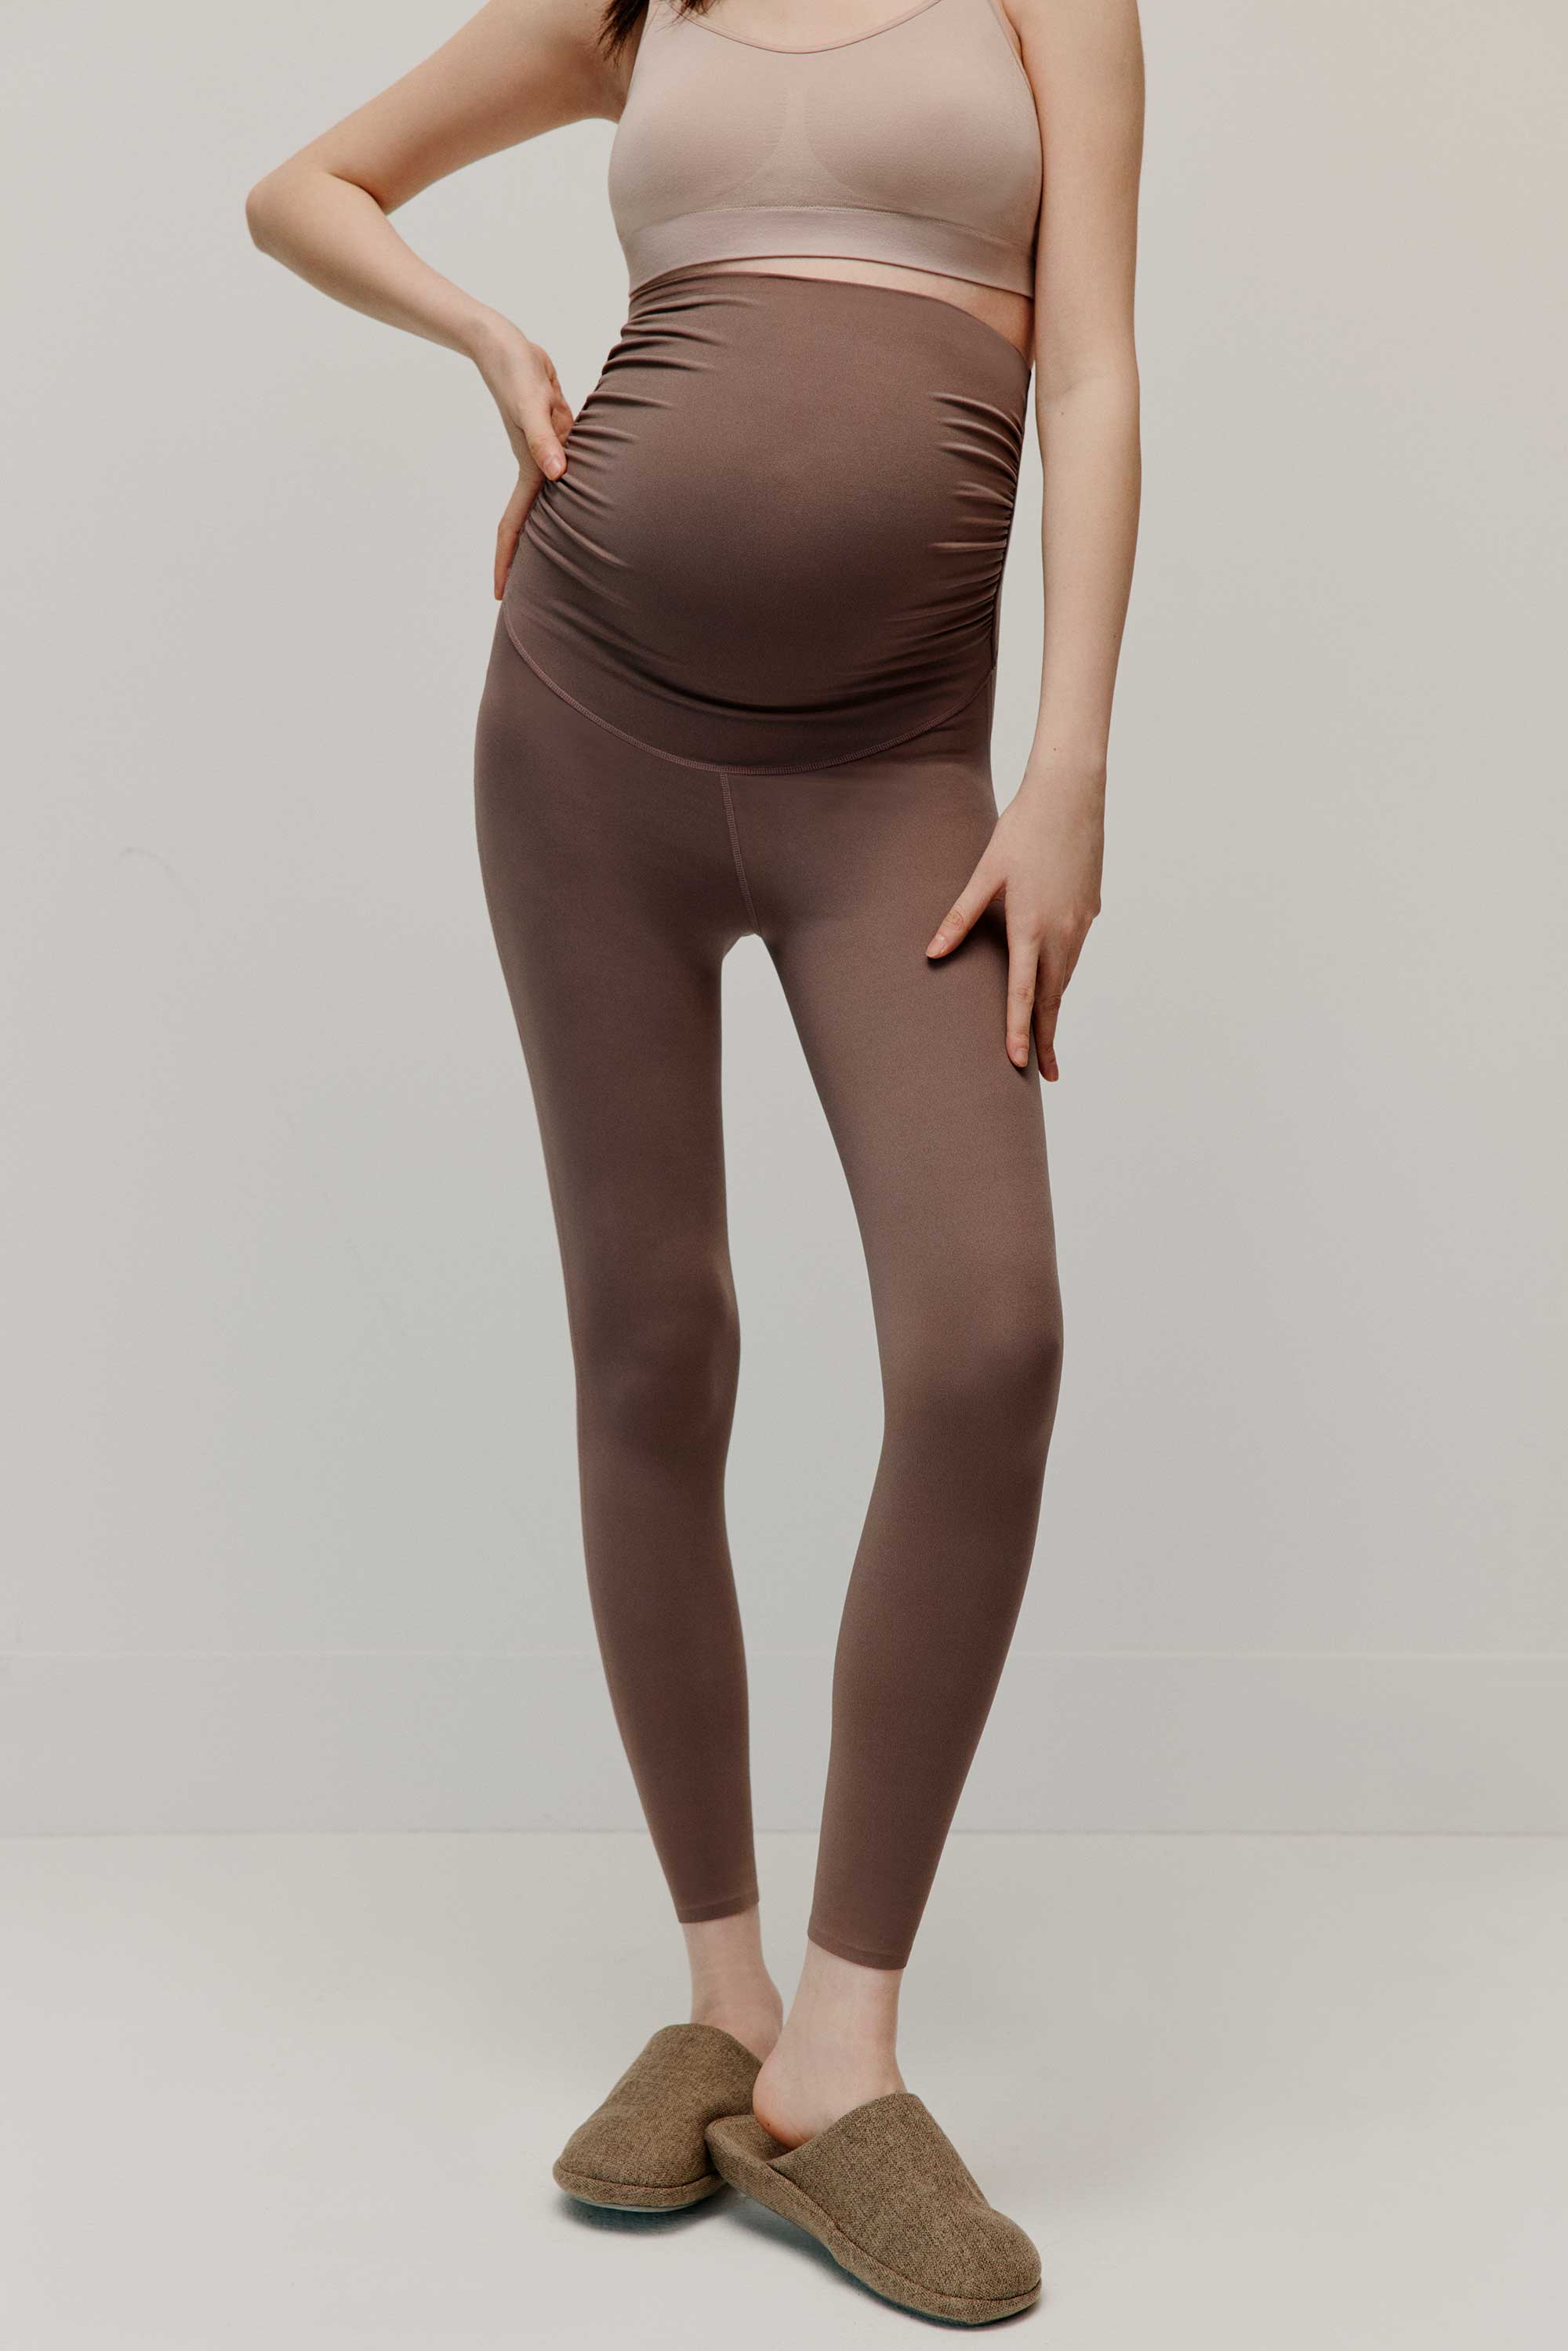 Heavenly Pregnancy Track Pants / Yoga Pants - Dim Grey – Mama Couture